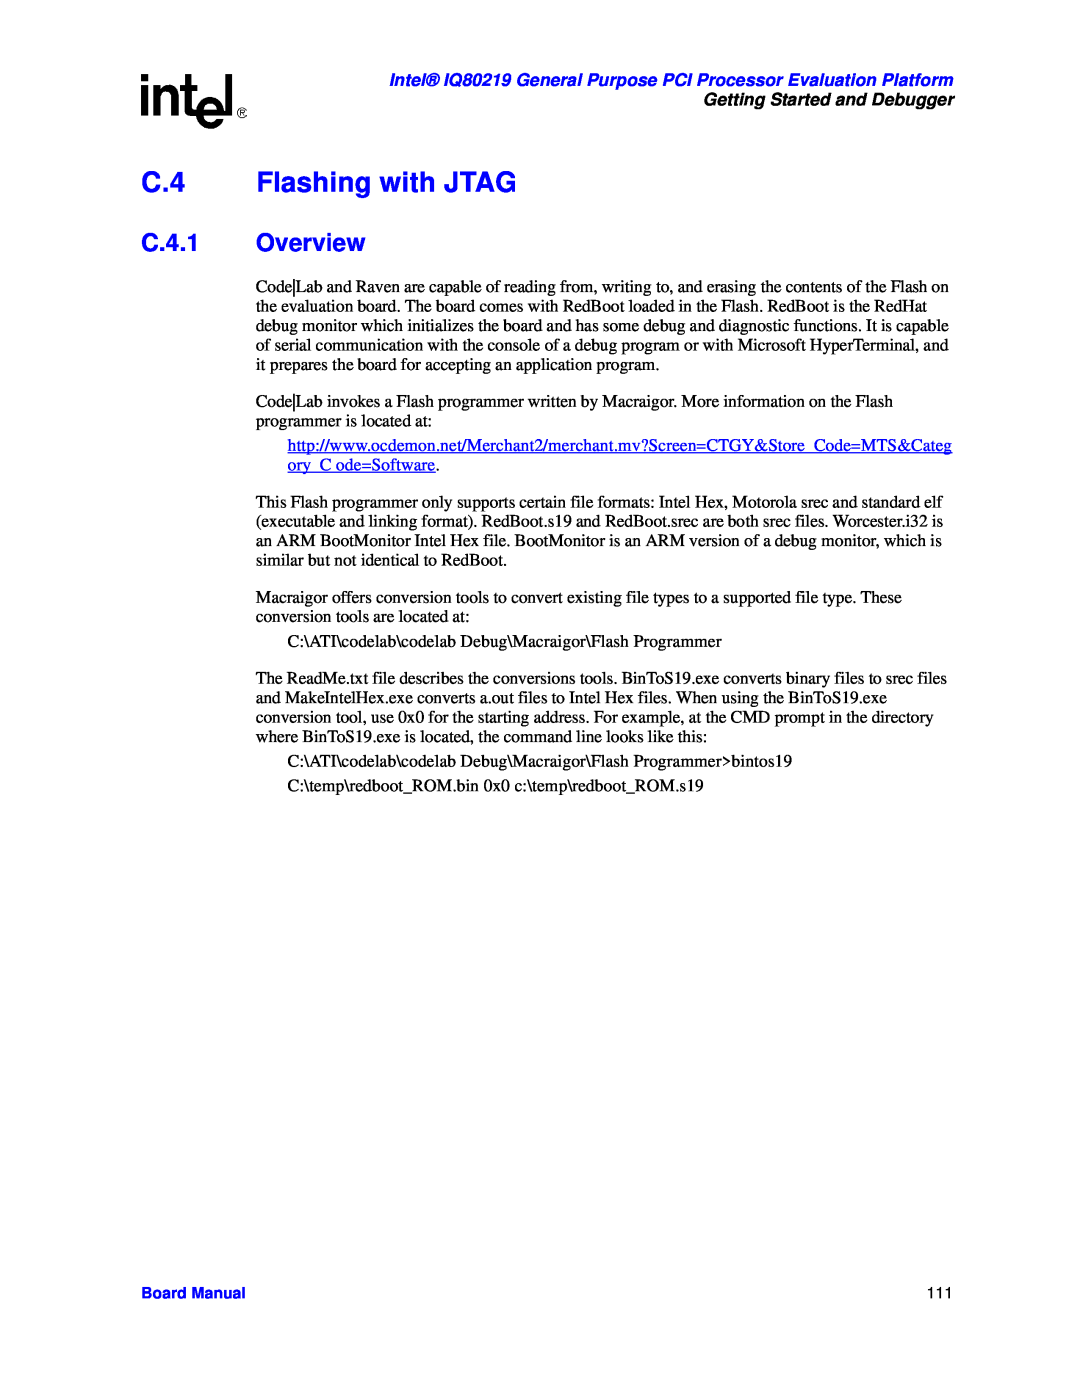 Intel manual C.4 Flashing with JTAG, C.4.1 Overview, Intel IQ80219 General Purpose PCI Processor Evaluation Platform 